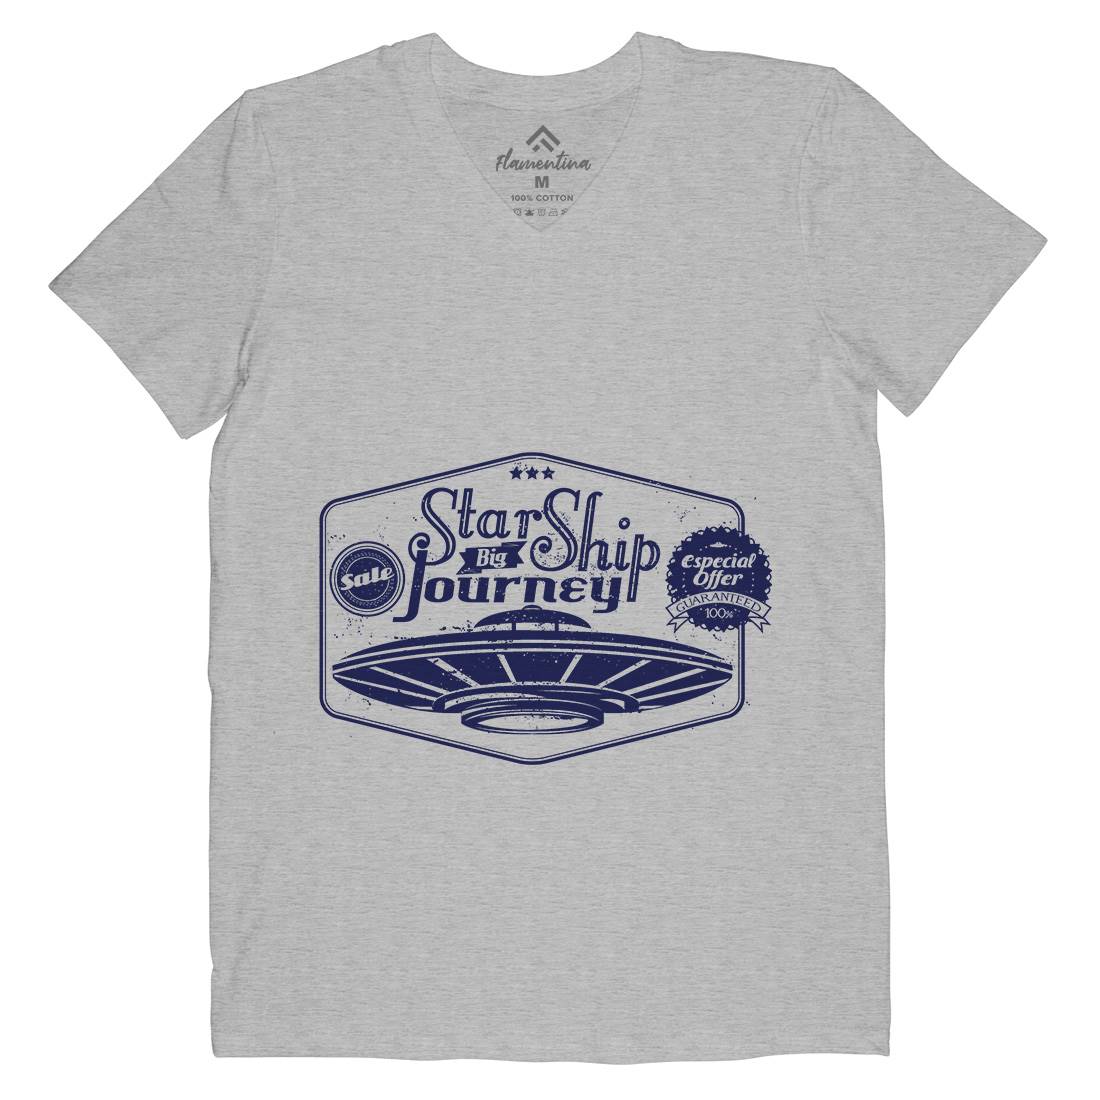 Star Ship Mens Organic V-Neck T-Shirt Space A956